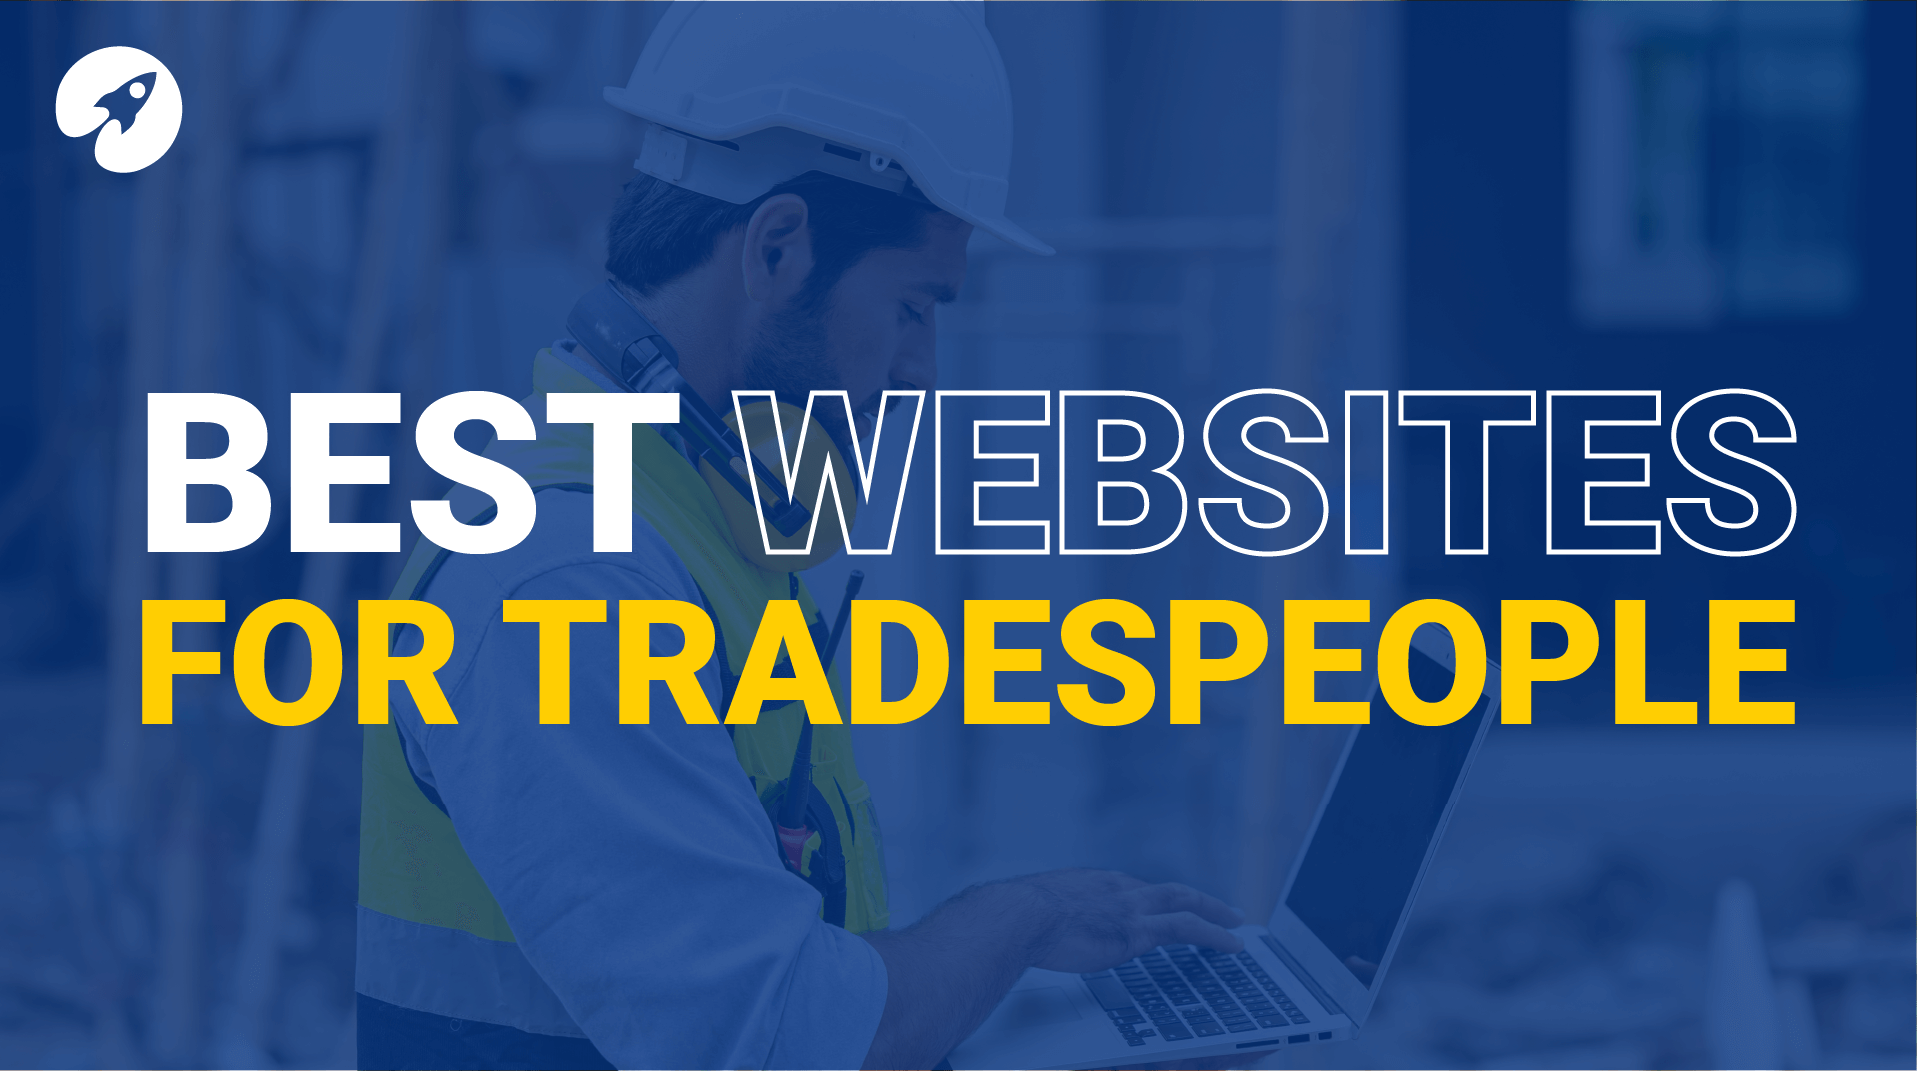 Best websites for tradesmen